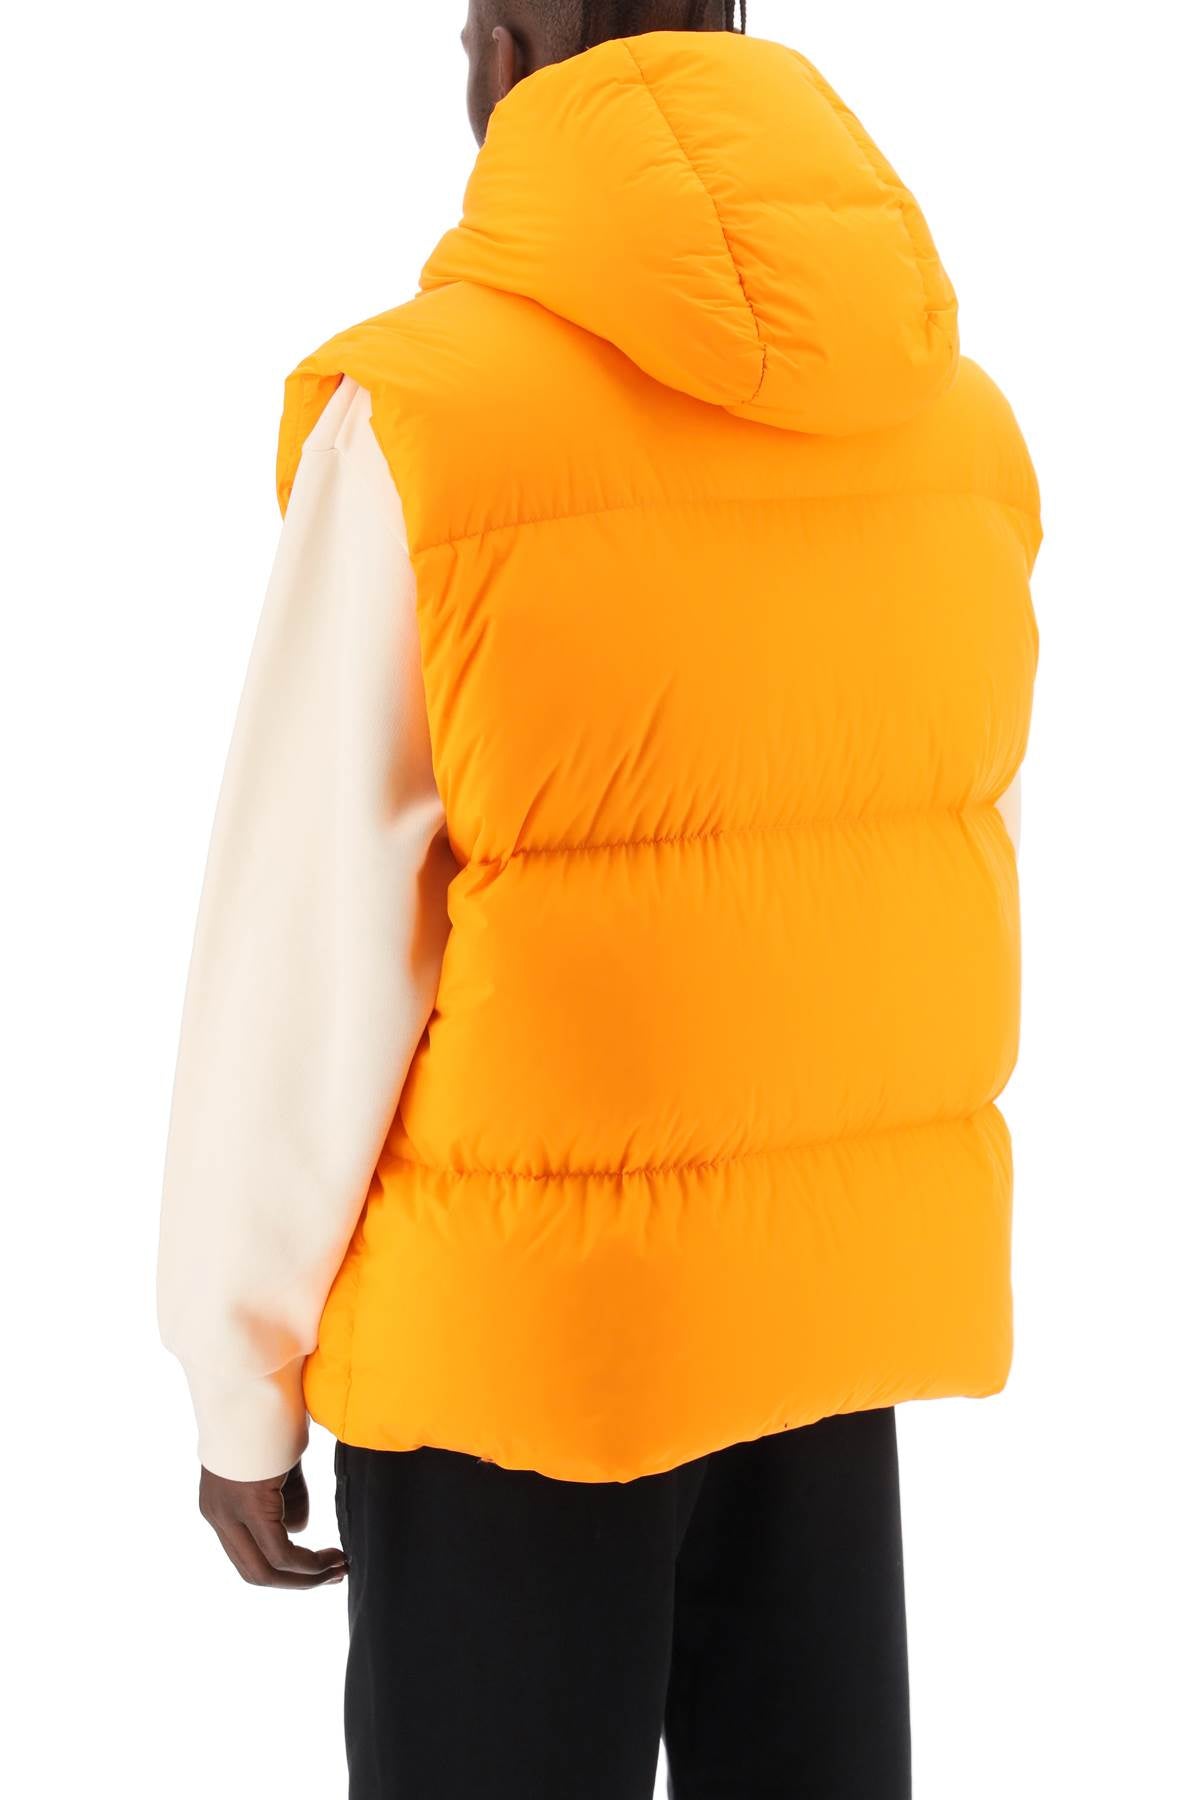 MONCLER X ROC NATION BY JAY Z Men's Orange Down Vest - FW23 Collection